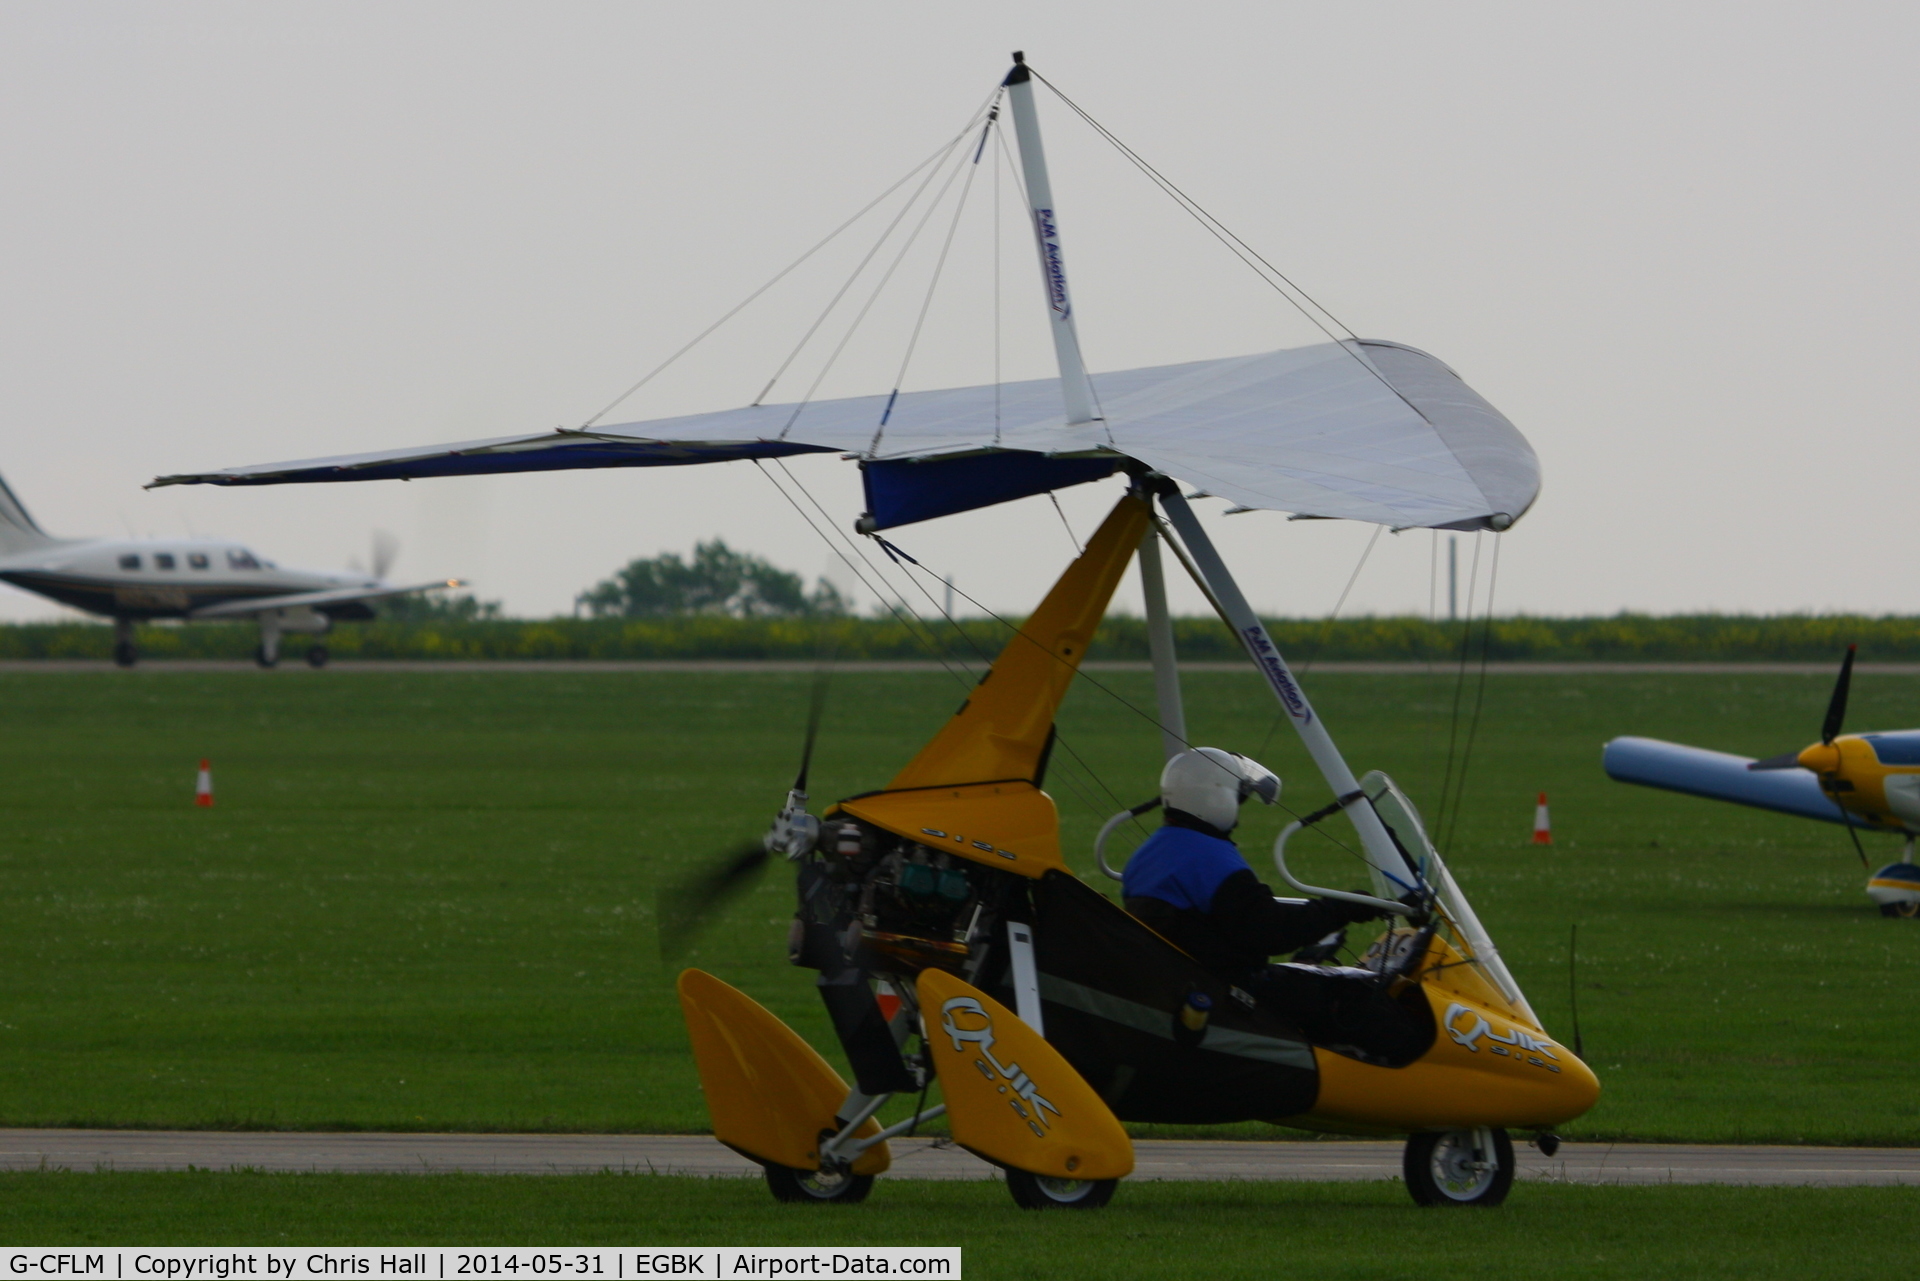 G-CFLM, 2008 Mainair Pegasus Quik C/N 8399, at AeroExpo 2014